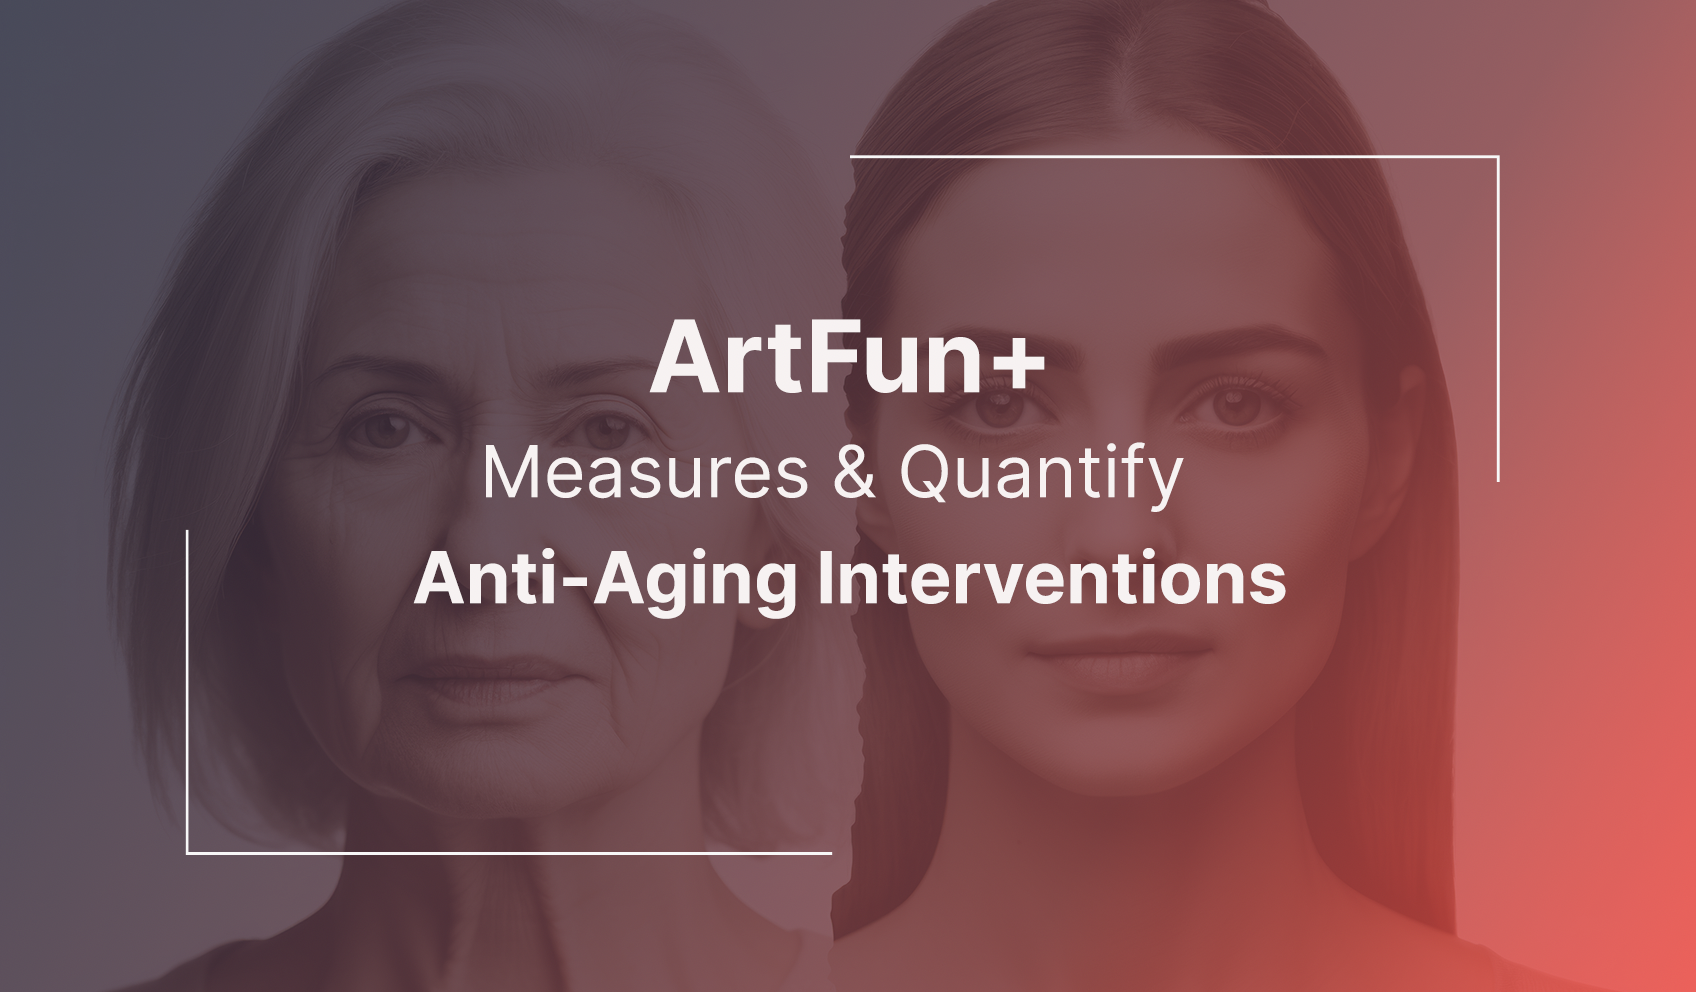 Artfun+ Measures & Quantify Anti-Aging Interventions